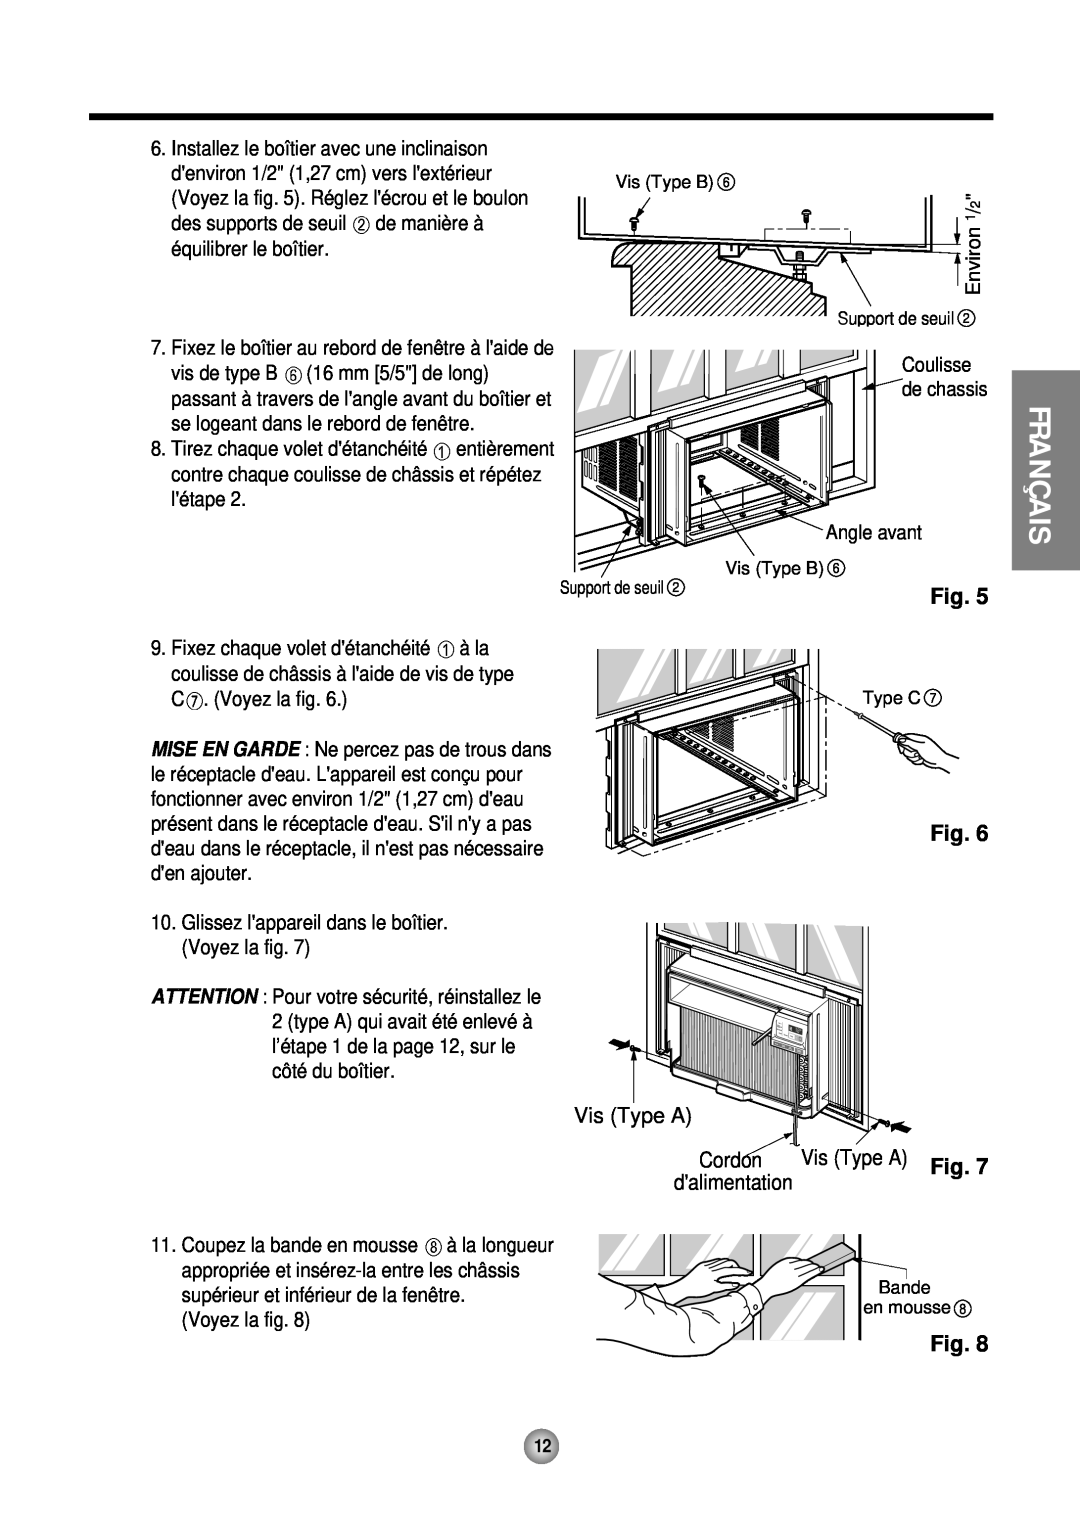 Friedrich CP10, CP12 operation manual Français, Vis Type A, Cordon, dalimentation 